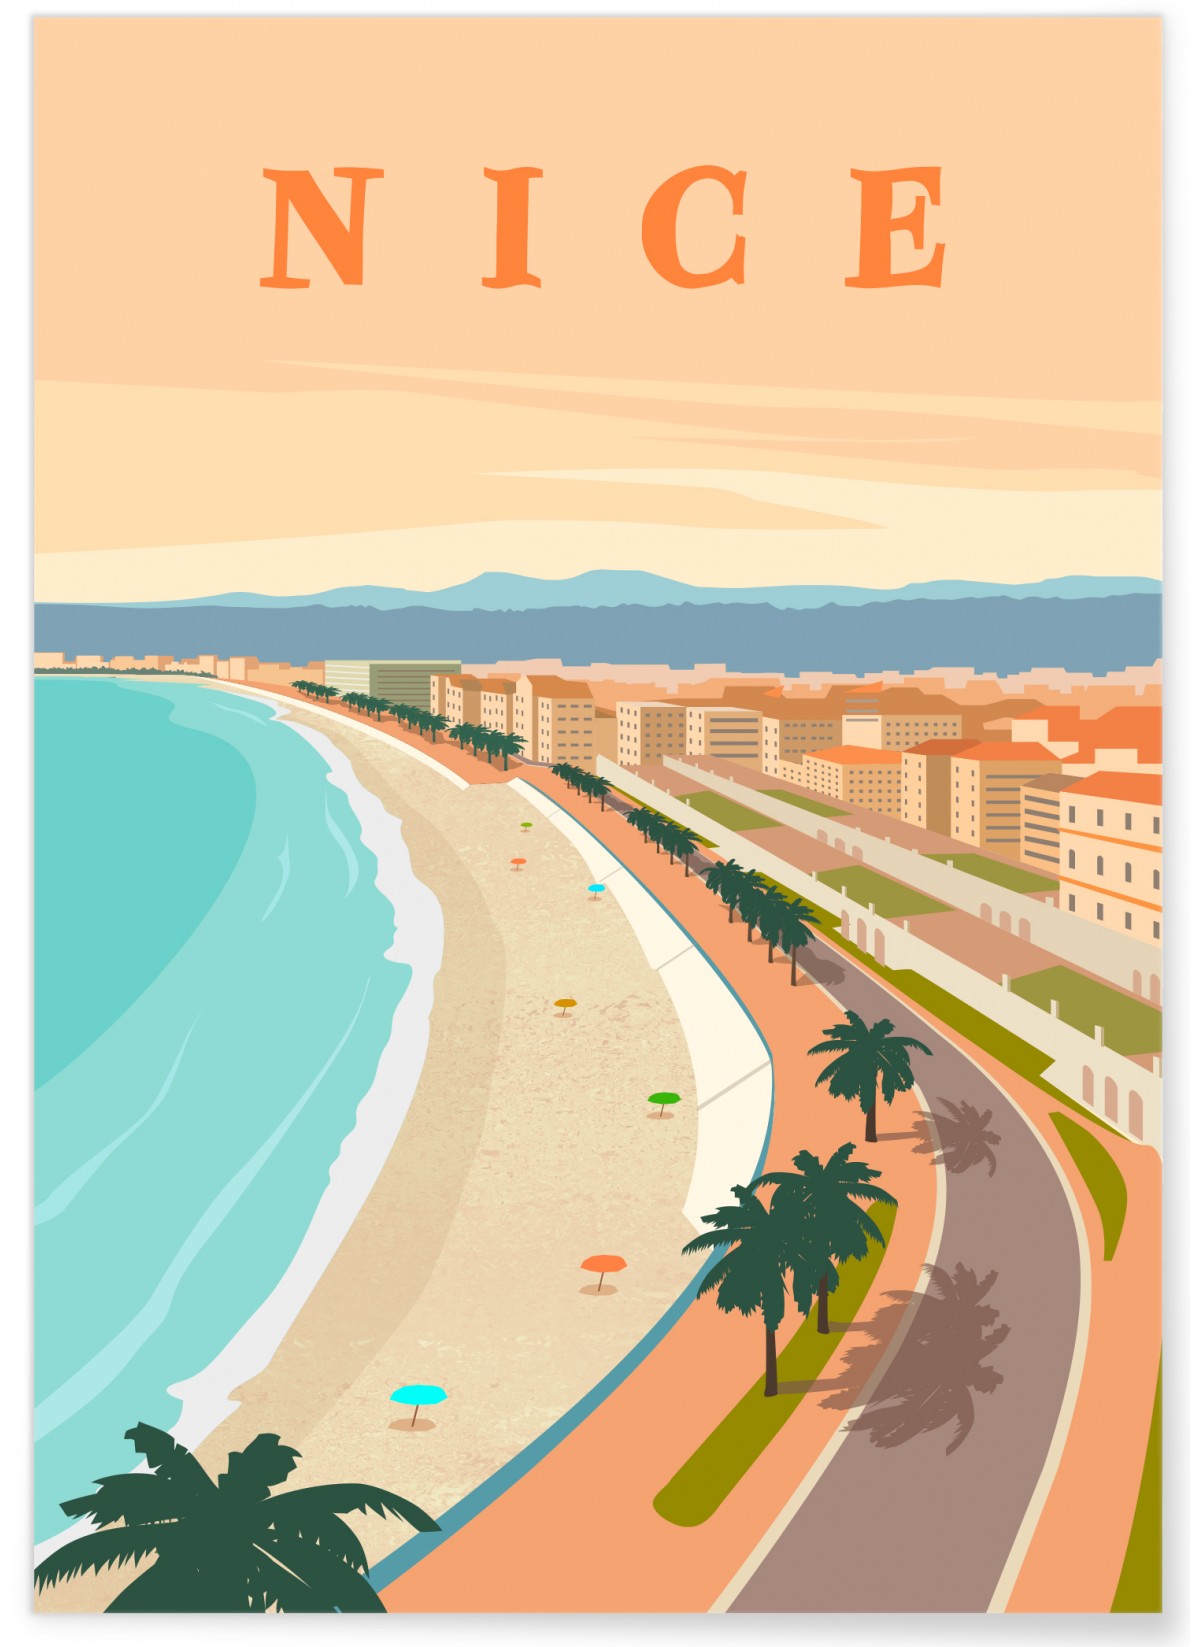 Affiche ville Nice 2